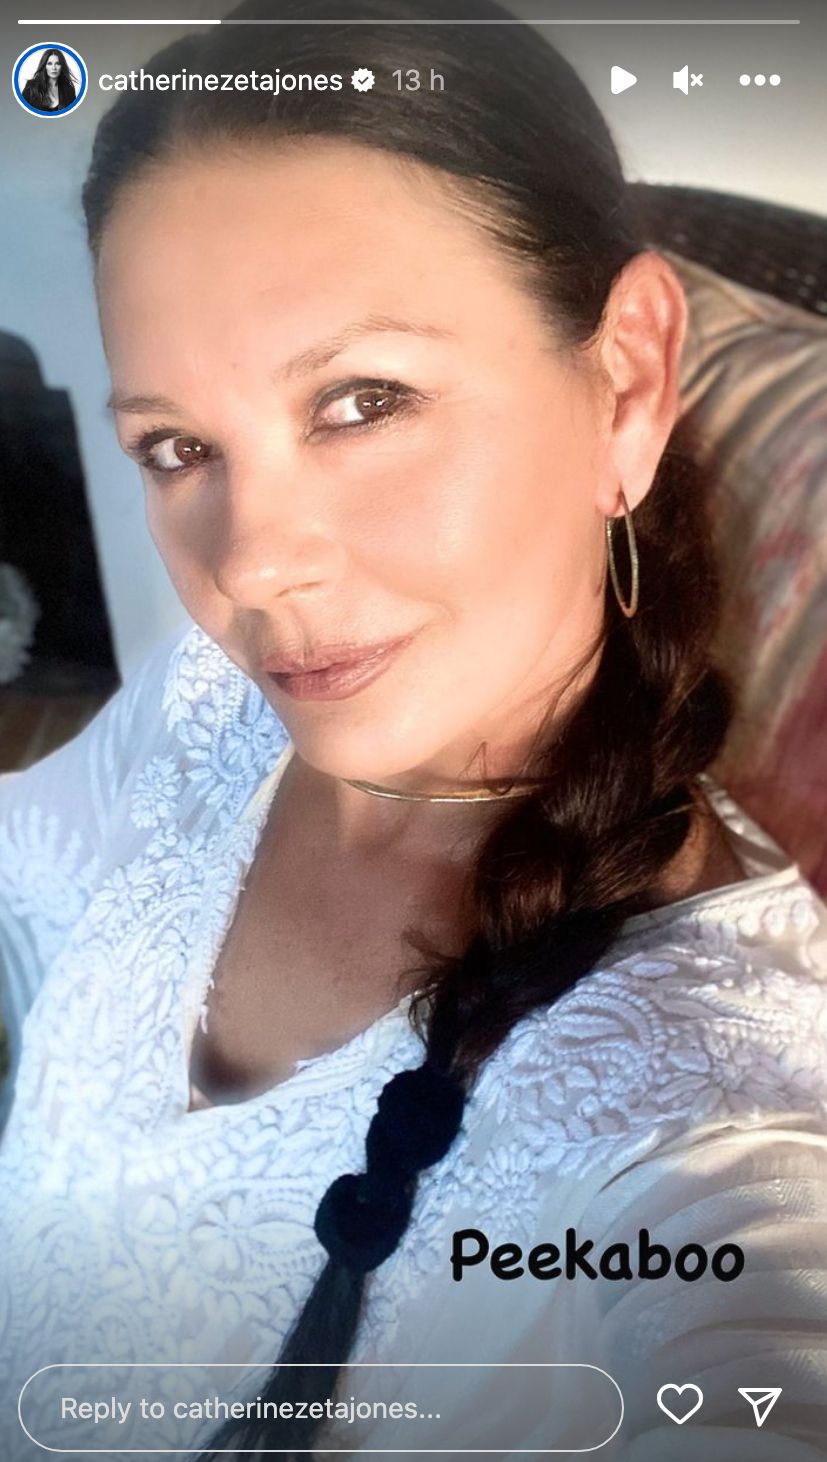 Catherine Zeta-Jones selfie, she's wearing a white beach dress